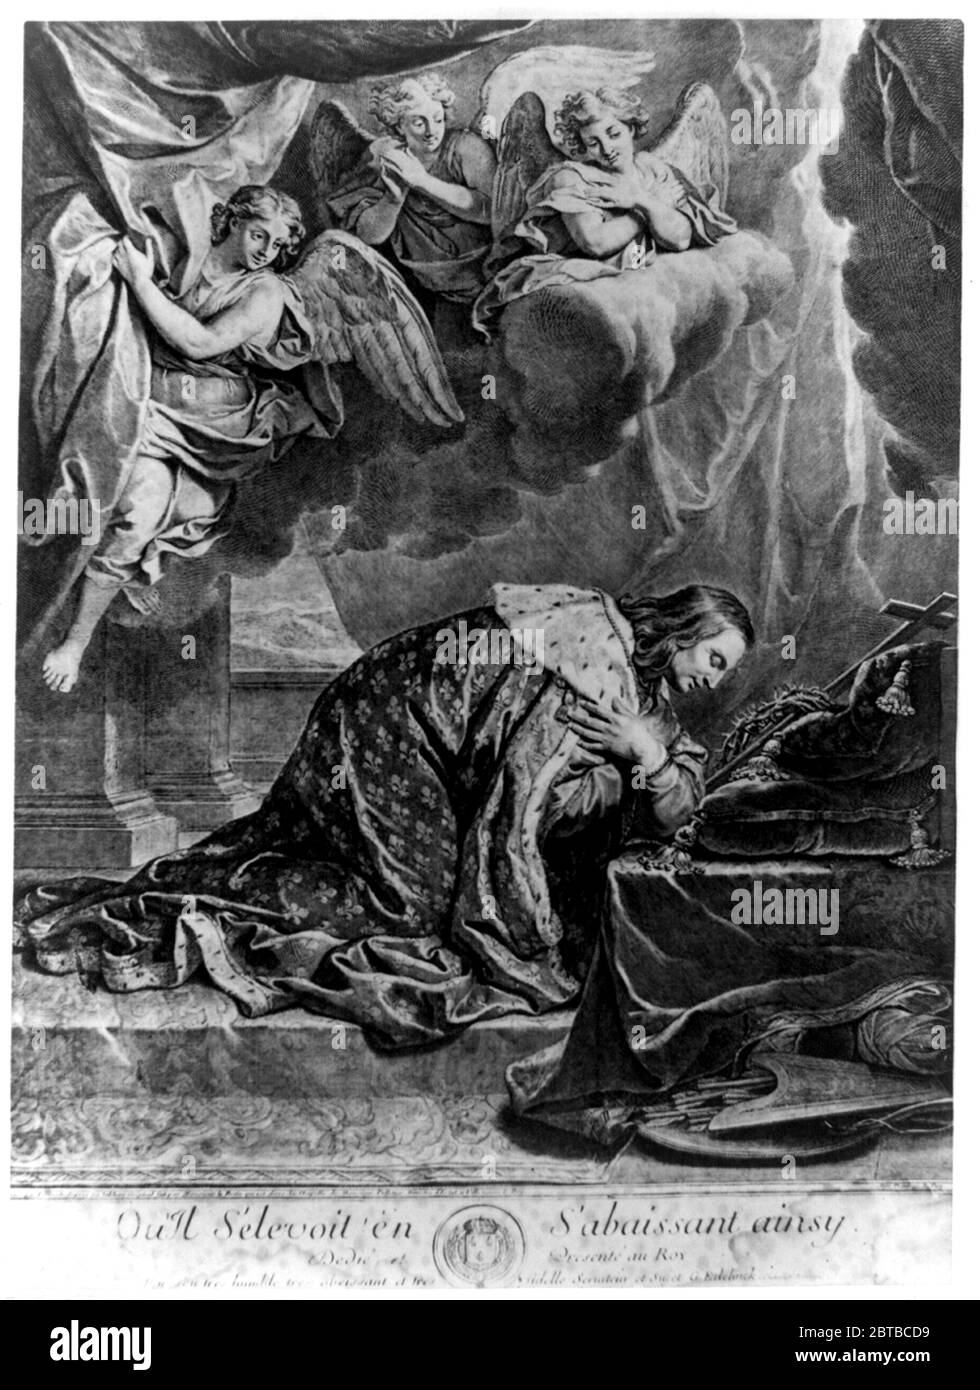 1260 ca, FRANCE: Saint Louis the French King LOUIS IX ( 1212 - 1270 ) of Capet house. Father of King Philip III the Bold ( Philippe Le Hardi ). - CAPETINGI - NOBILITY - NOBILI francesi - Nobiltà francese - FRANCIA - illustrazione - illustration - engraving - incisione - LUIGI IX Re di Francia - SANTO - RELIGIONE CATTOLICA - CATHOLIC RELIGION --- ARCHIVIO GBB Stock Photo